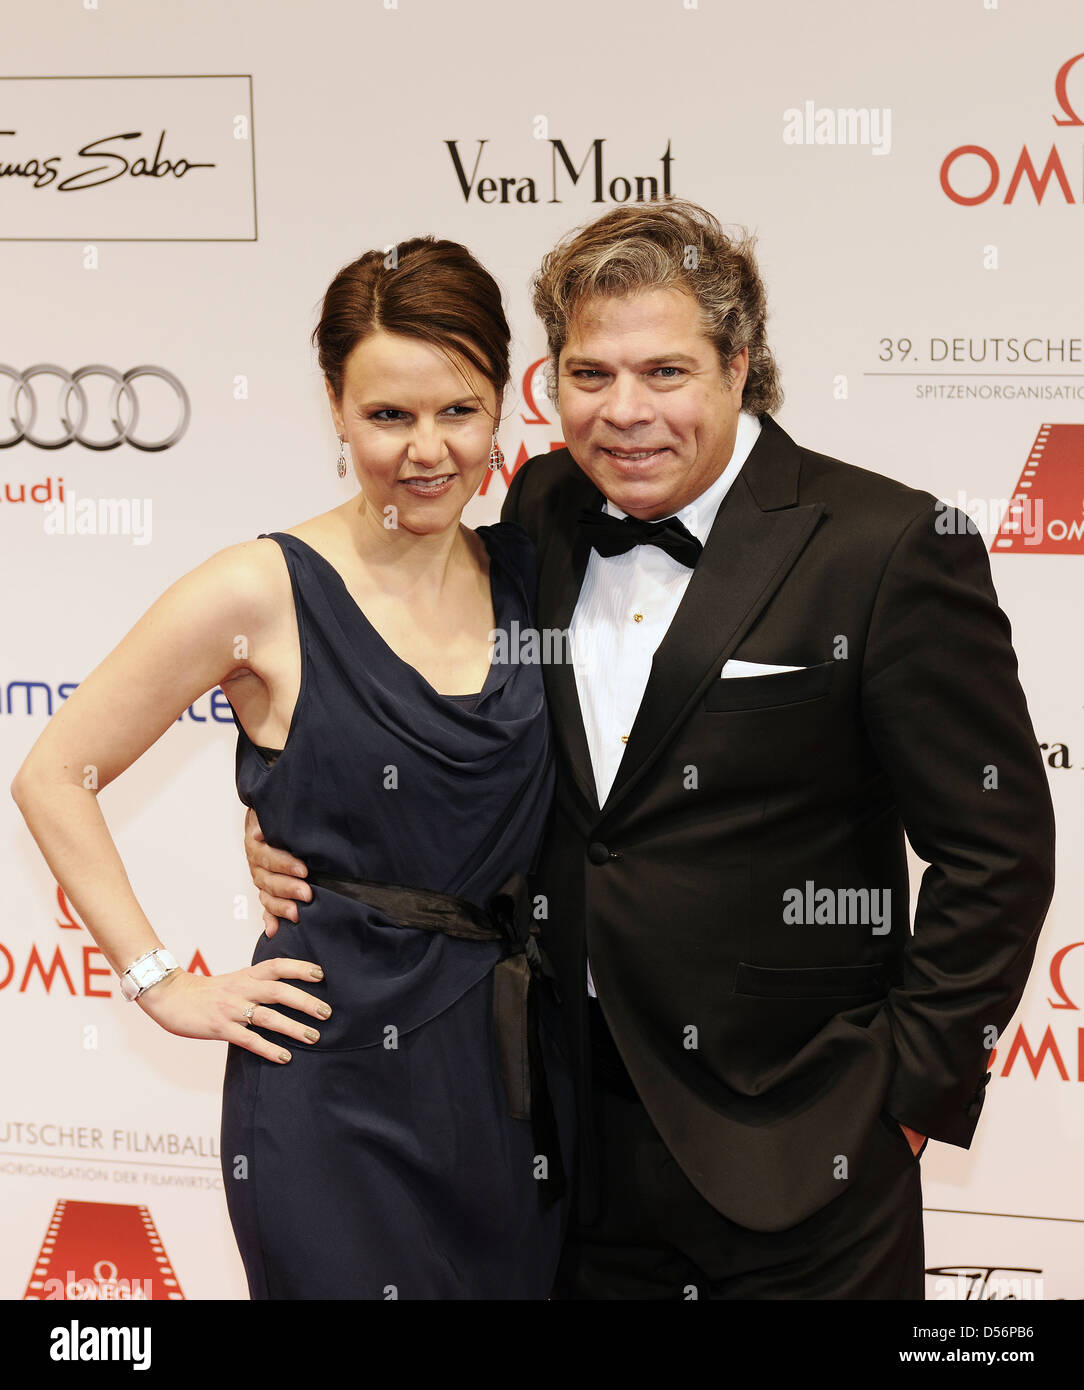 Julia Wolf and Thomas Friedel at 39th Deutscher Filmball at Hotel  Bayerischer Hof. Munich, Germany - 21.01.2012 Stock Photo - Alamy